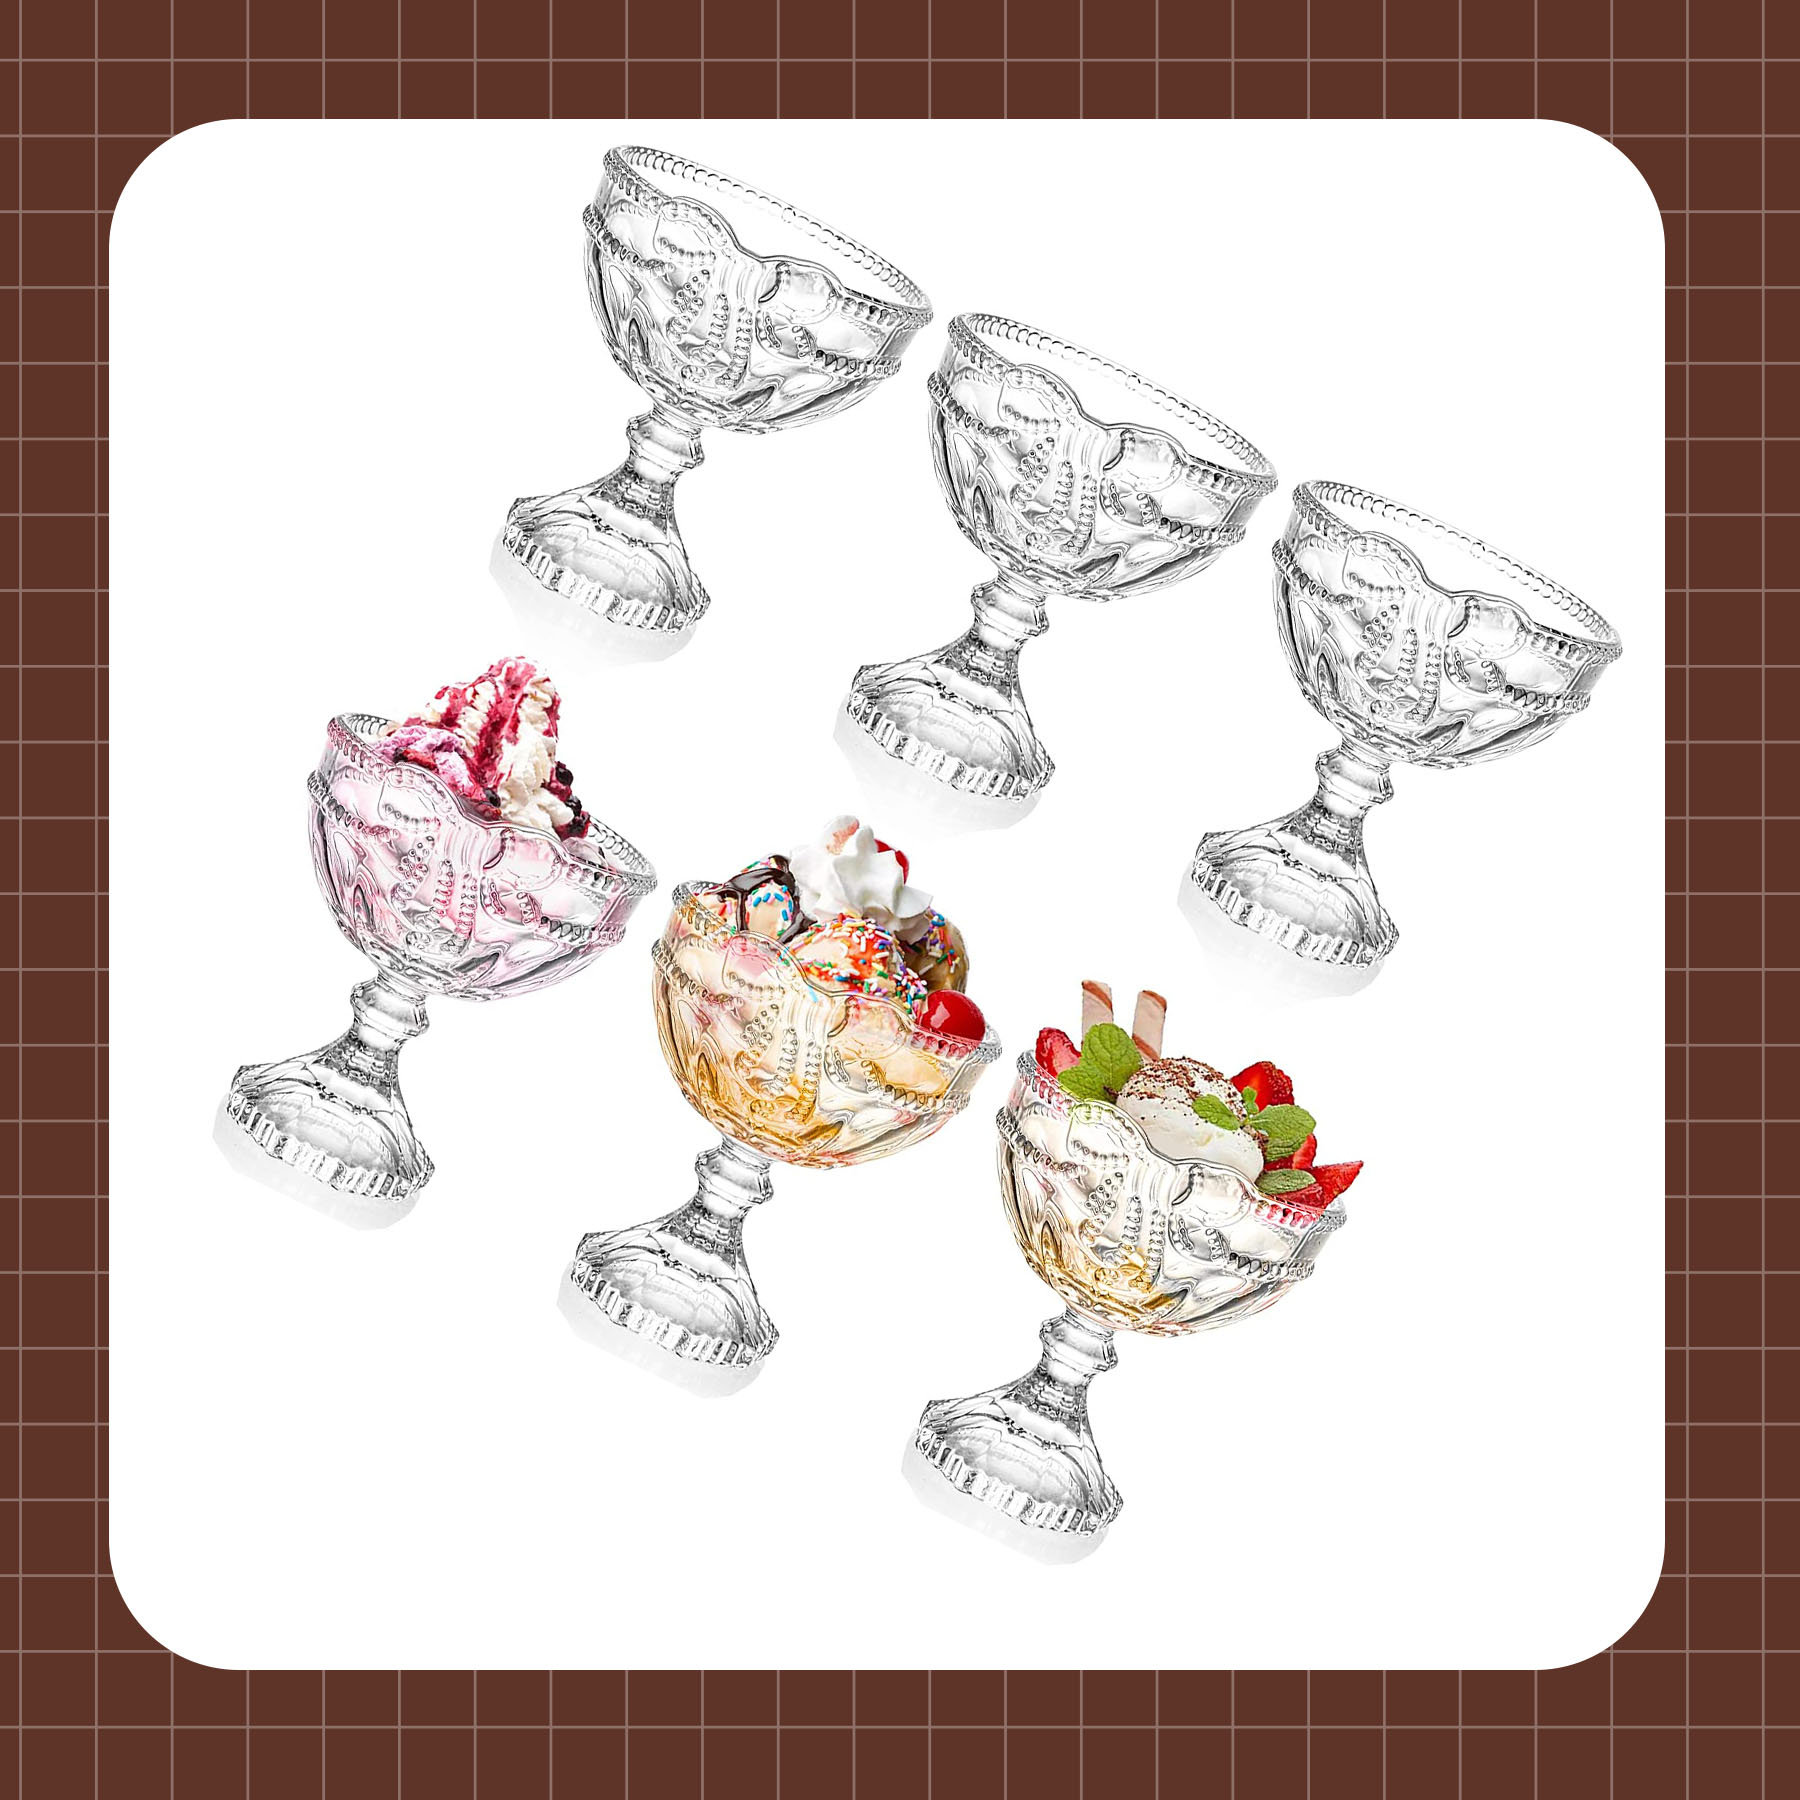 Trifle Taster Embossed Design Glass Bowl Set Ice Cream Serving